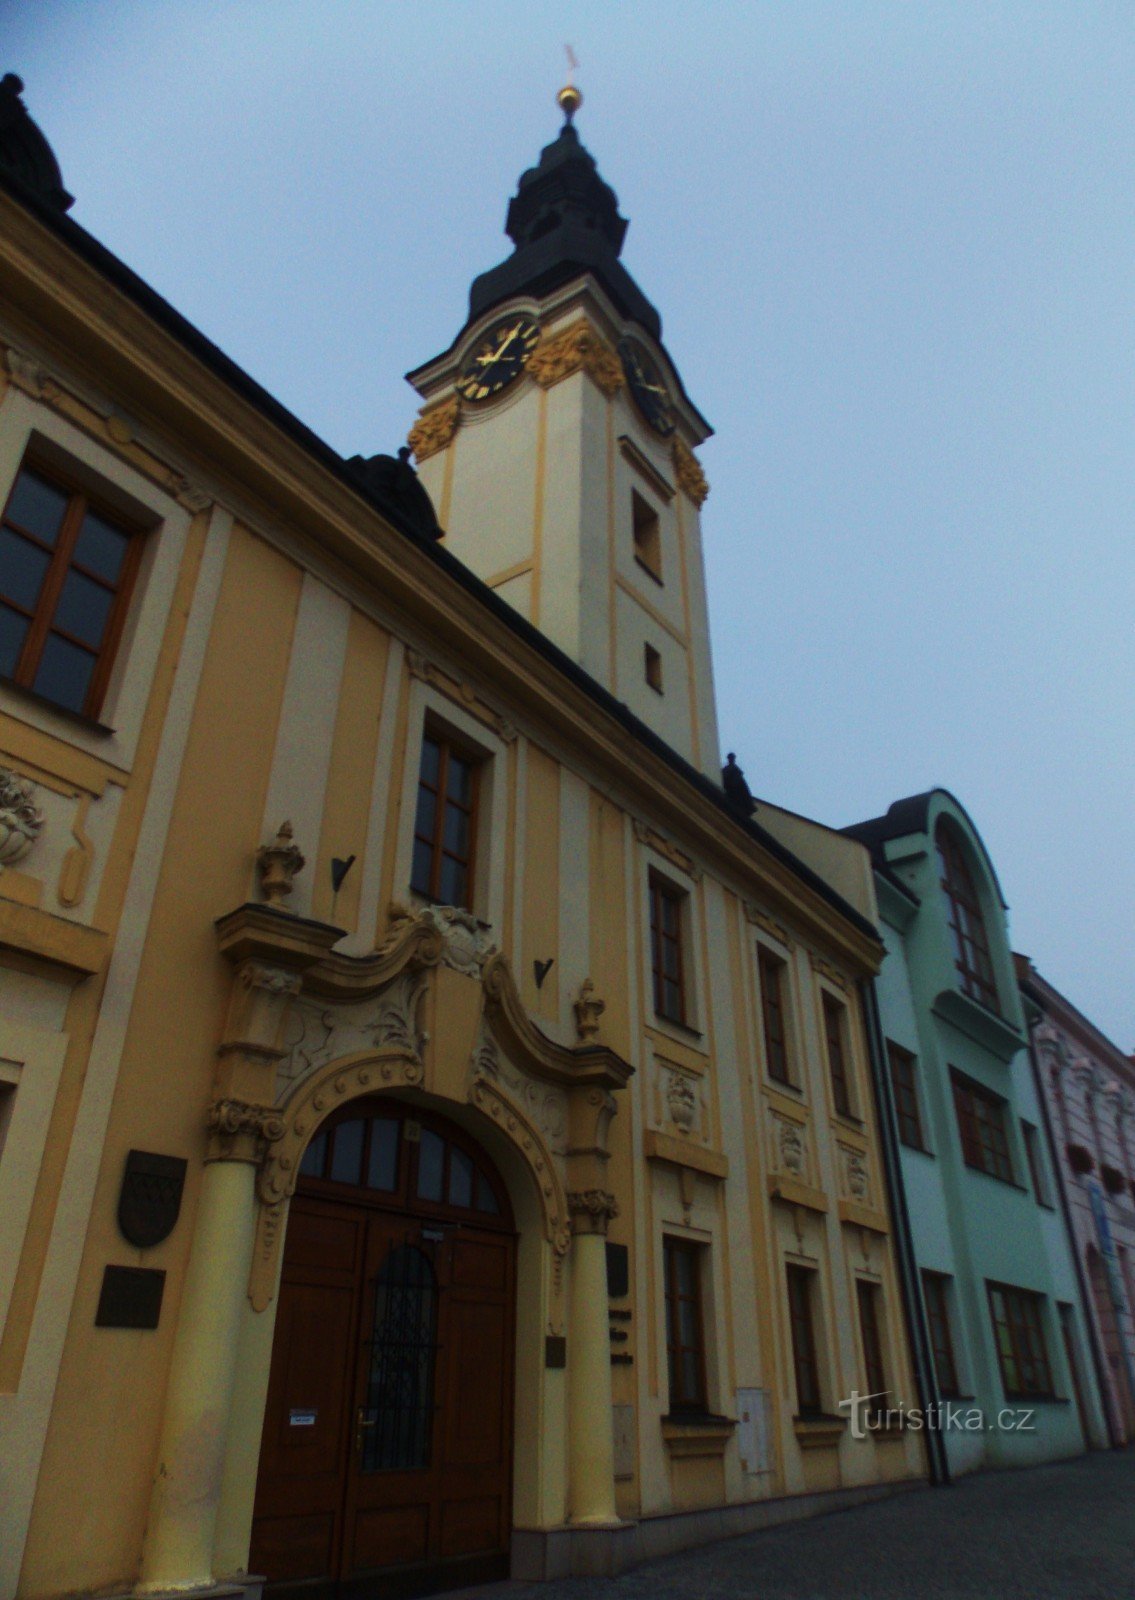 City Hall in Kojetín